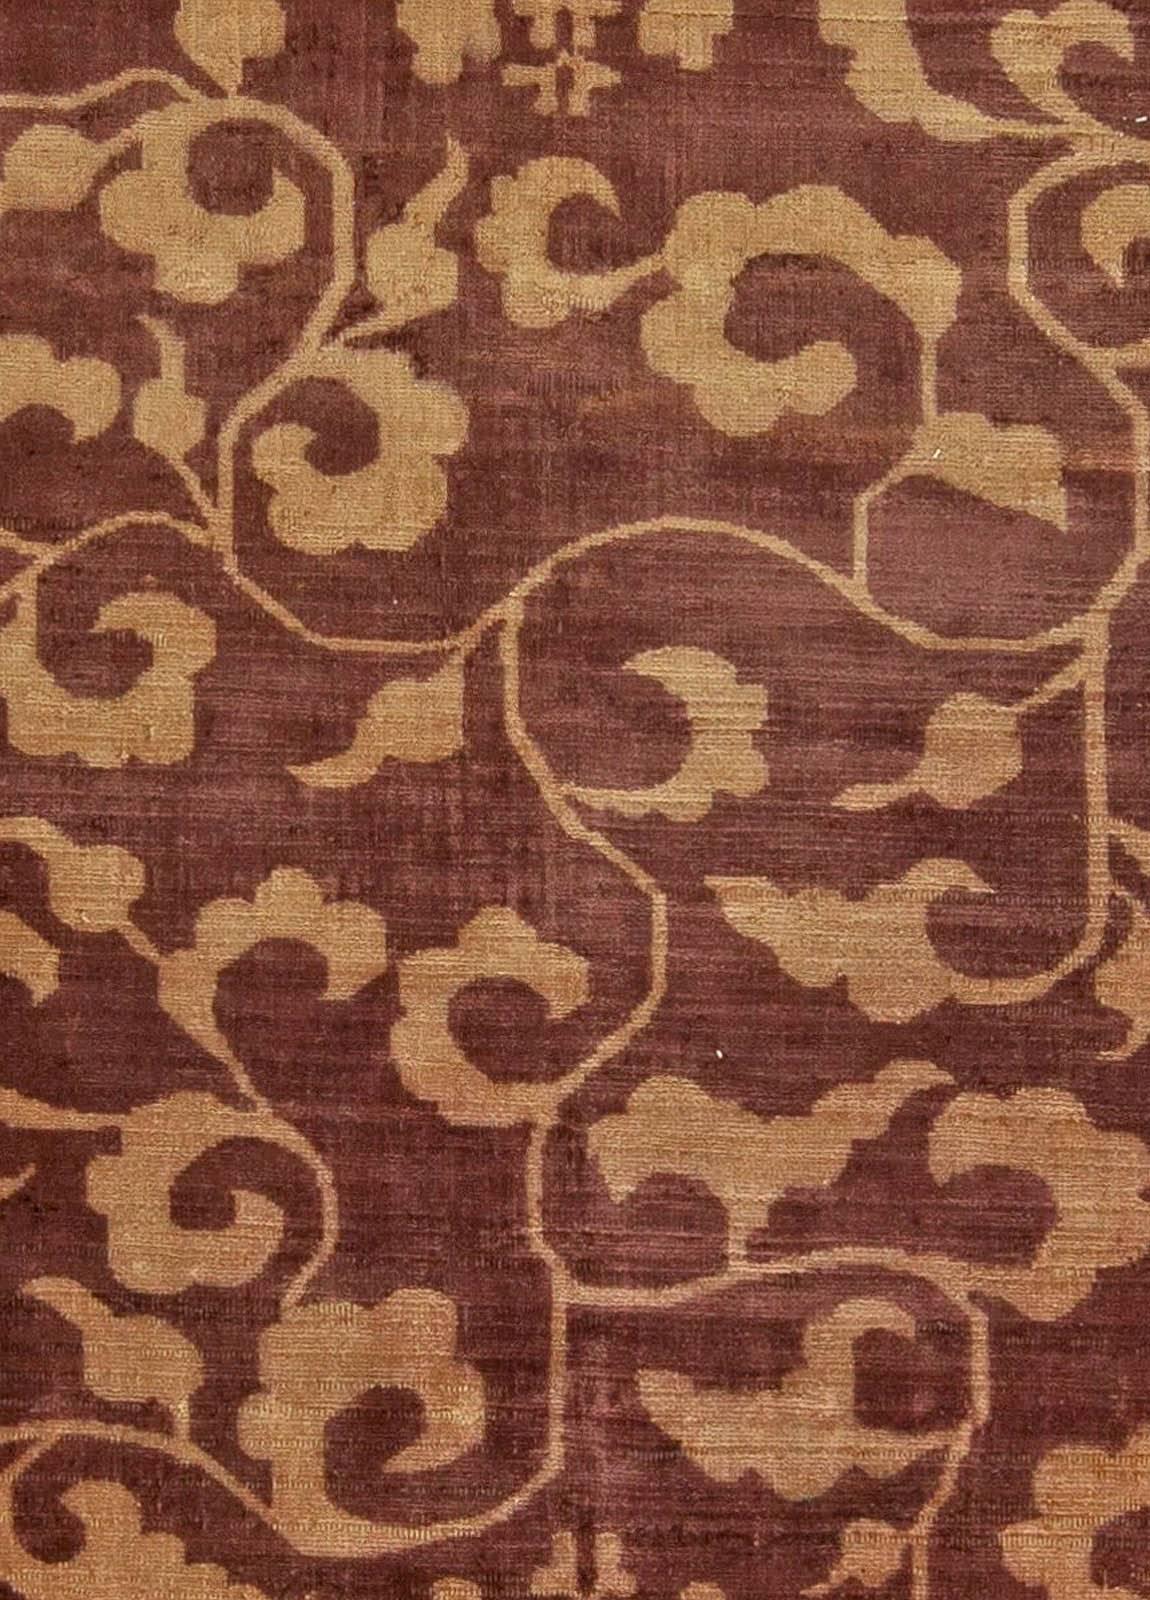 Mid-20th century Chinese Art Deco handmade wool rug by Doris Leslie Blau
Size: 9'2